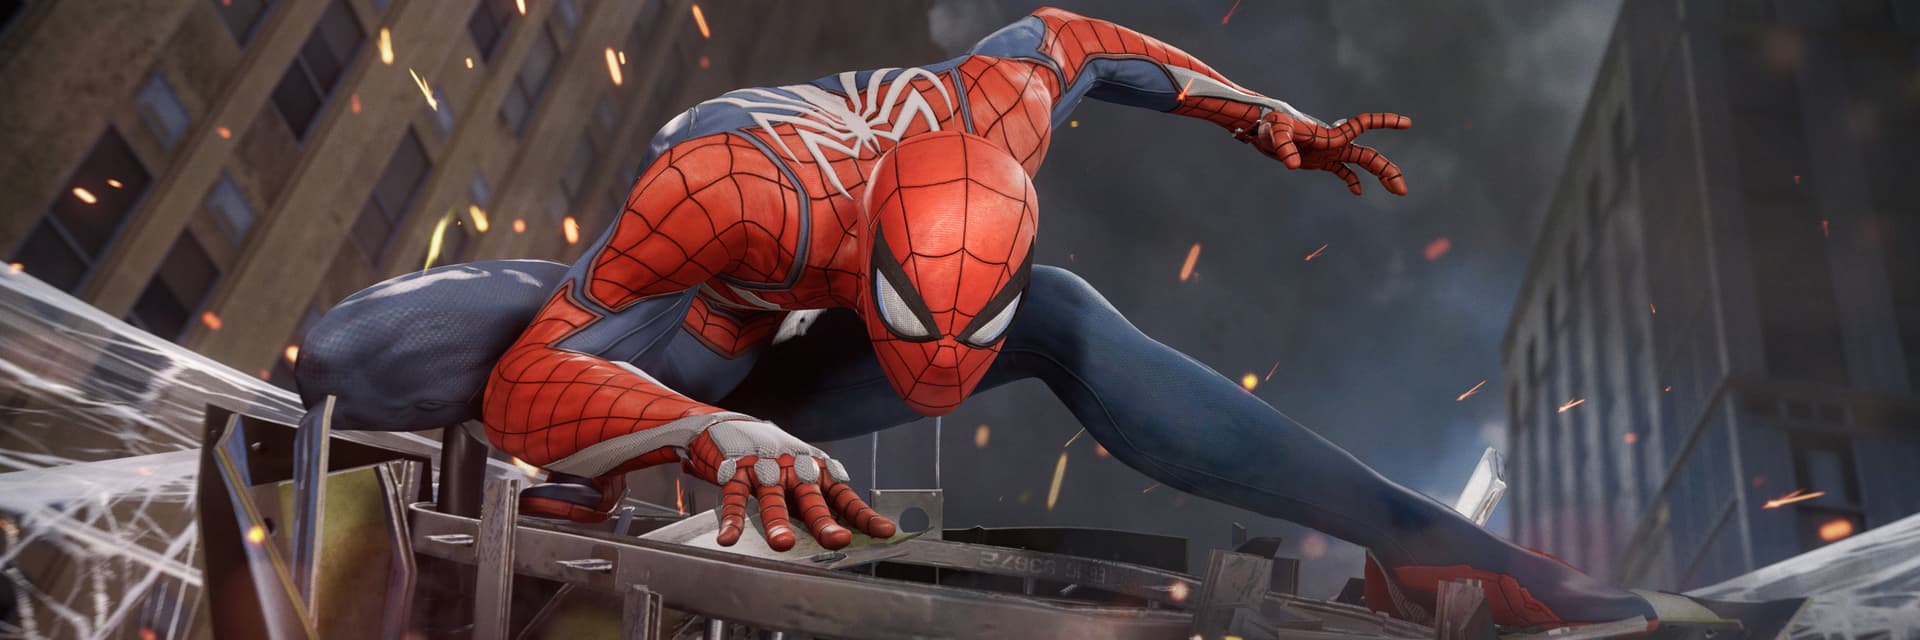 Marvel's Spider-Man Game Poster